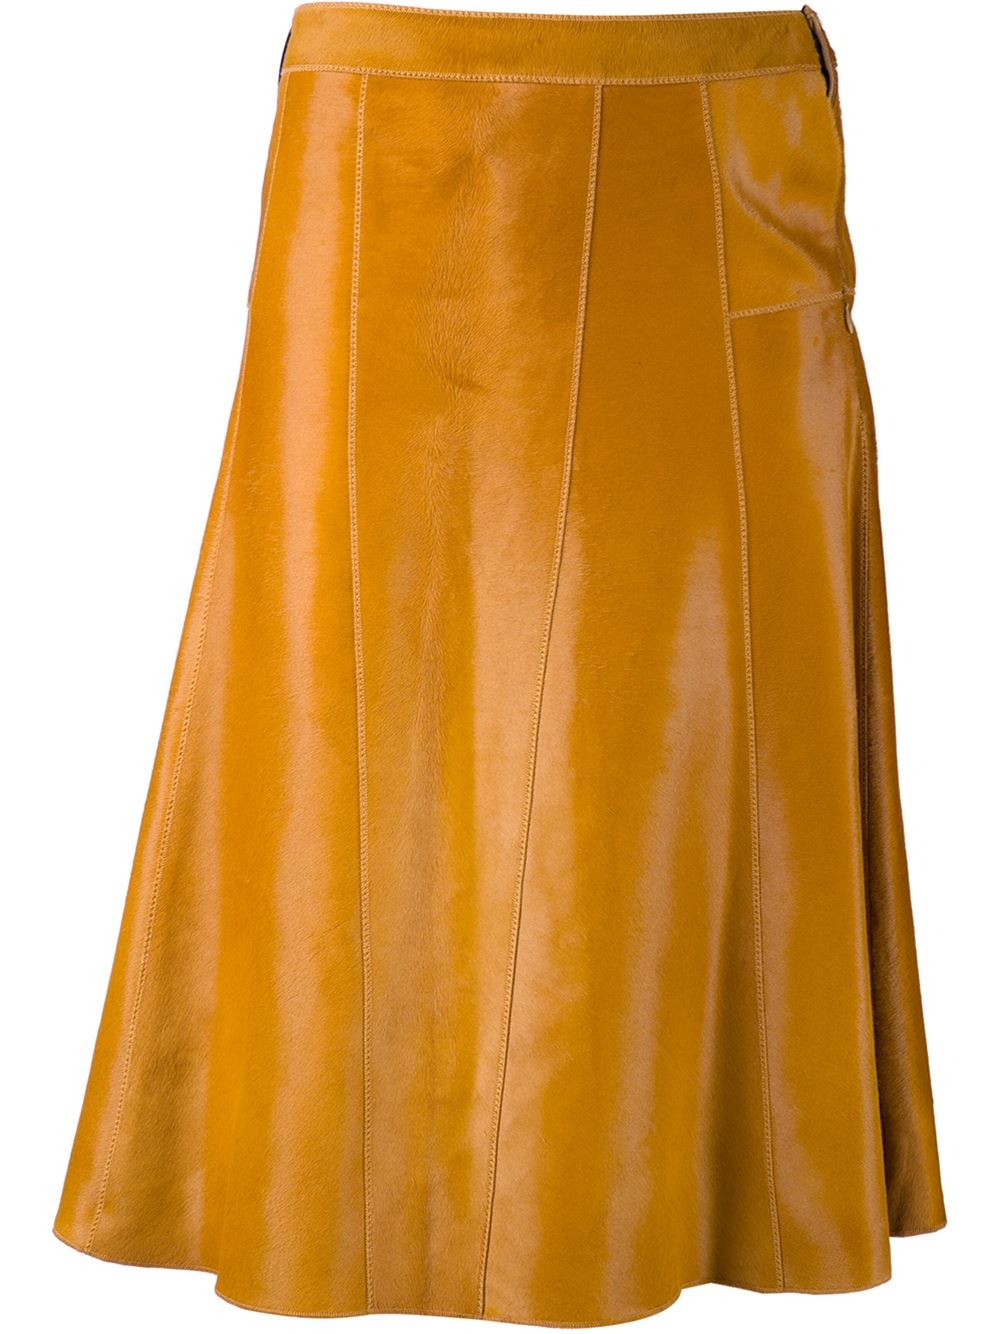 Lyst - Derek lam A-line Seamed Skirt in Brown